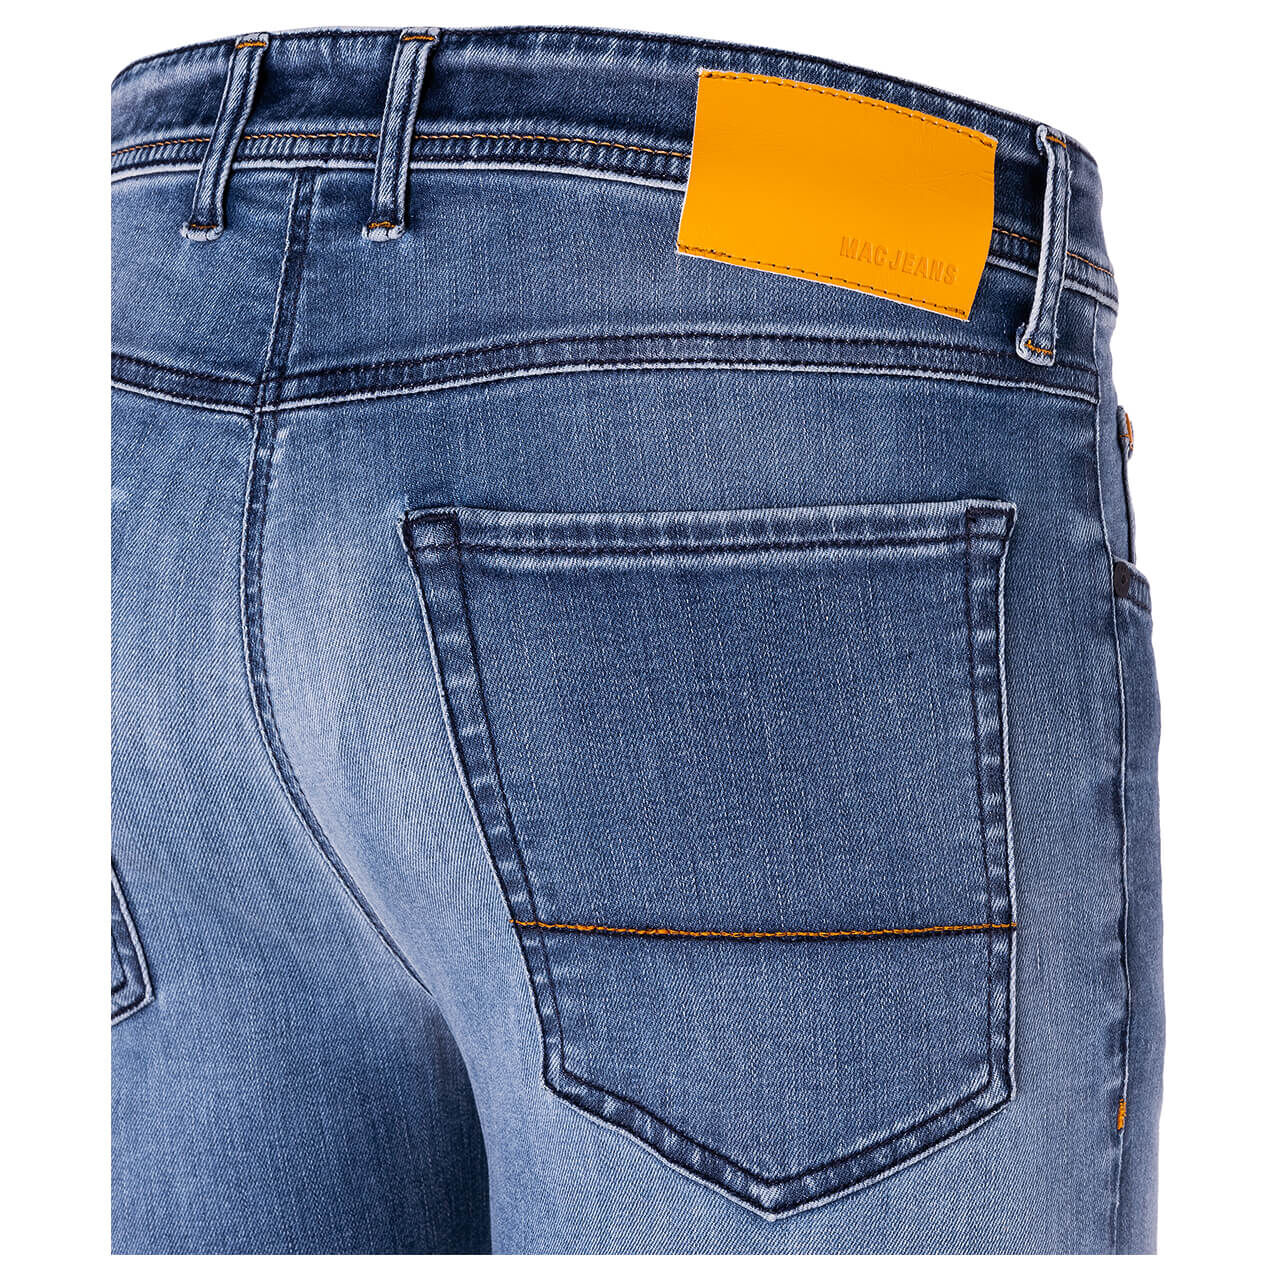 MAC Flexx Jeans venice blue used